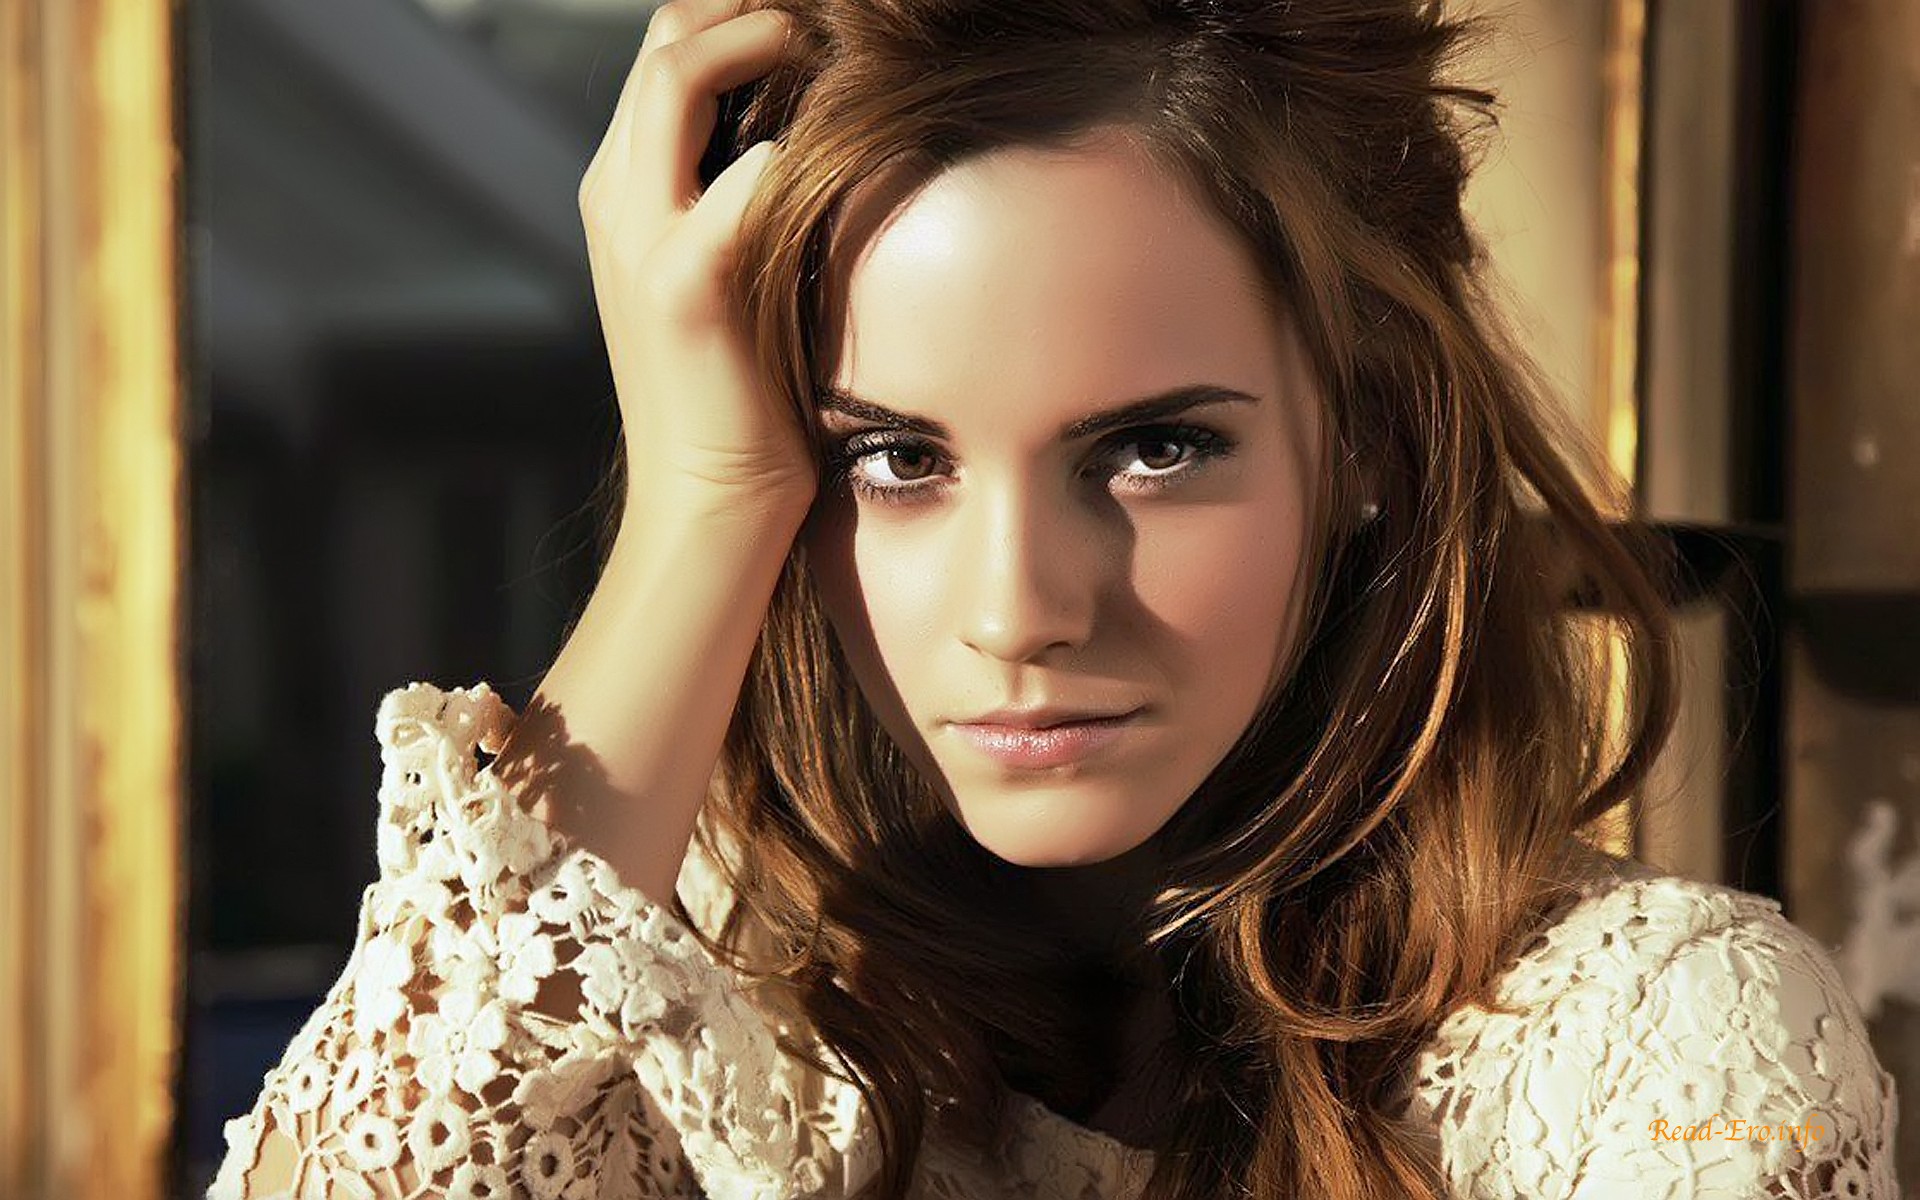 Beautiful Emma Watson Pictures - Wallpaper, High ...